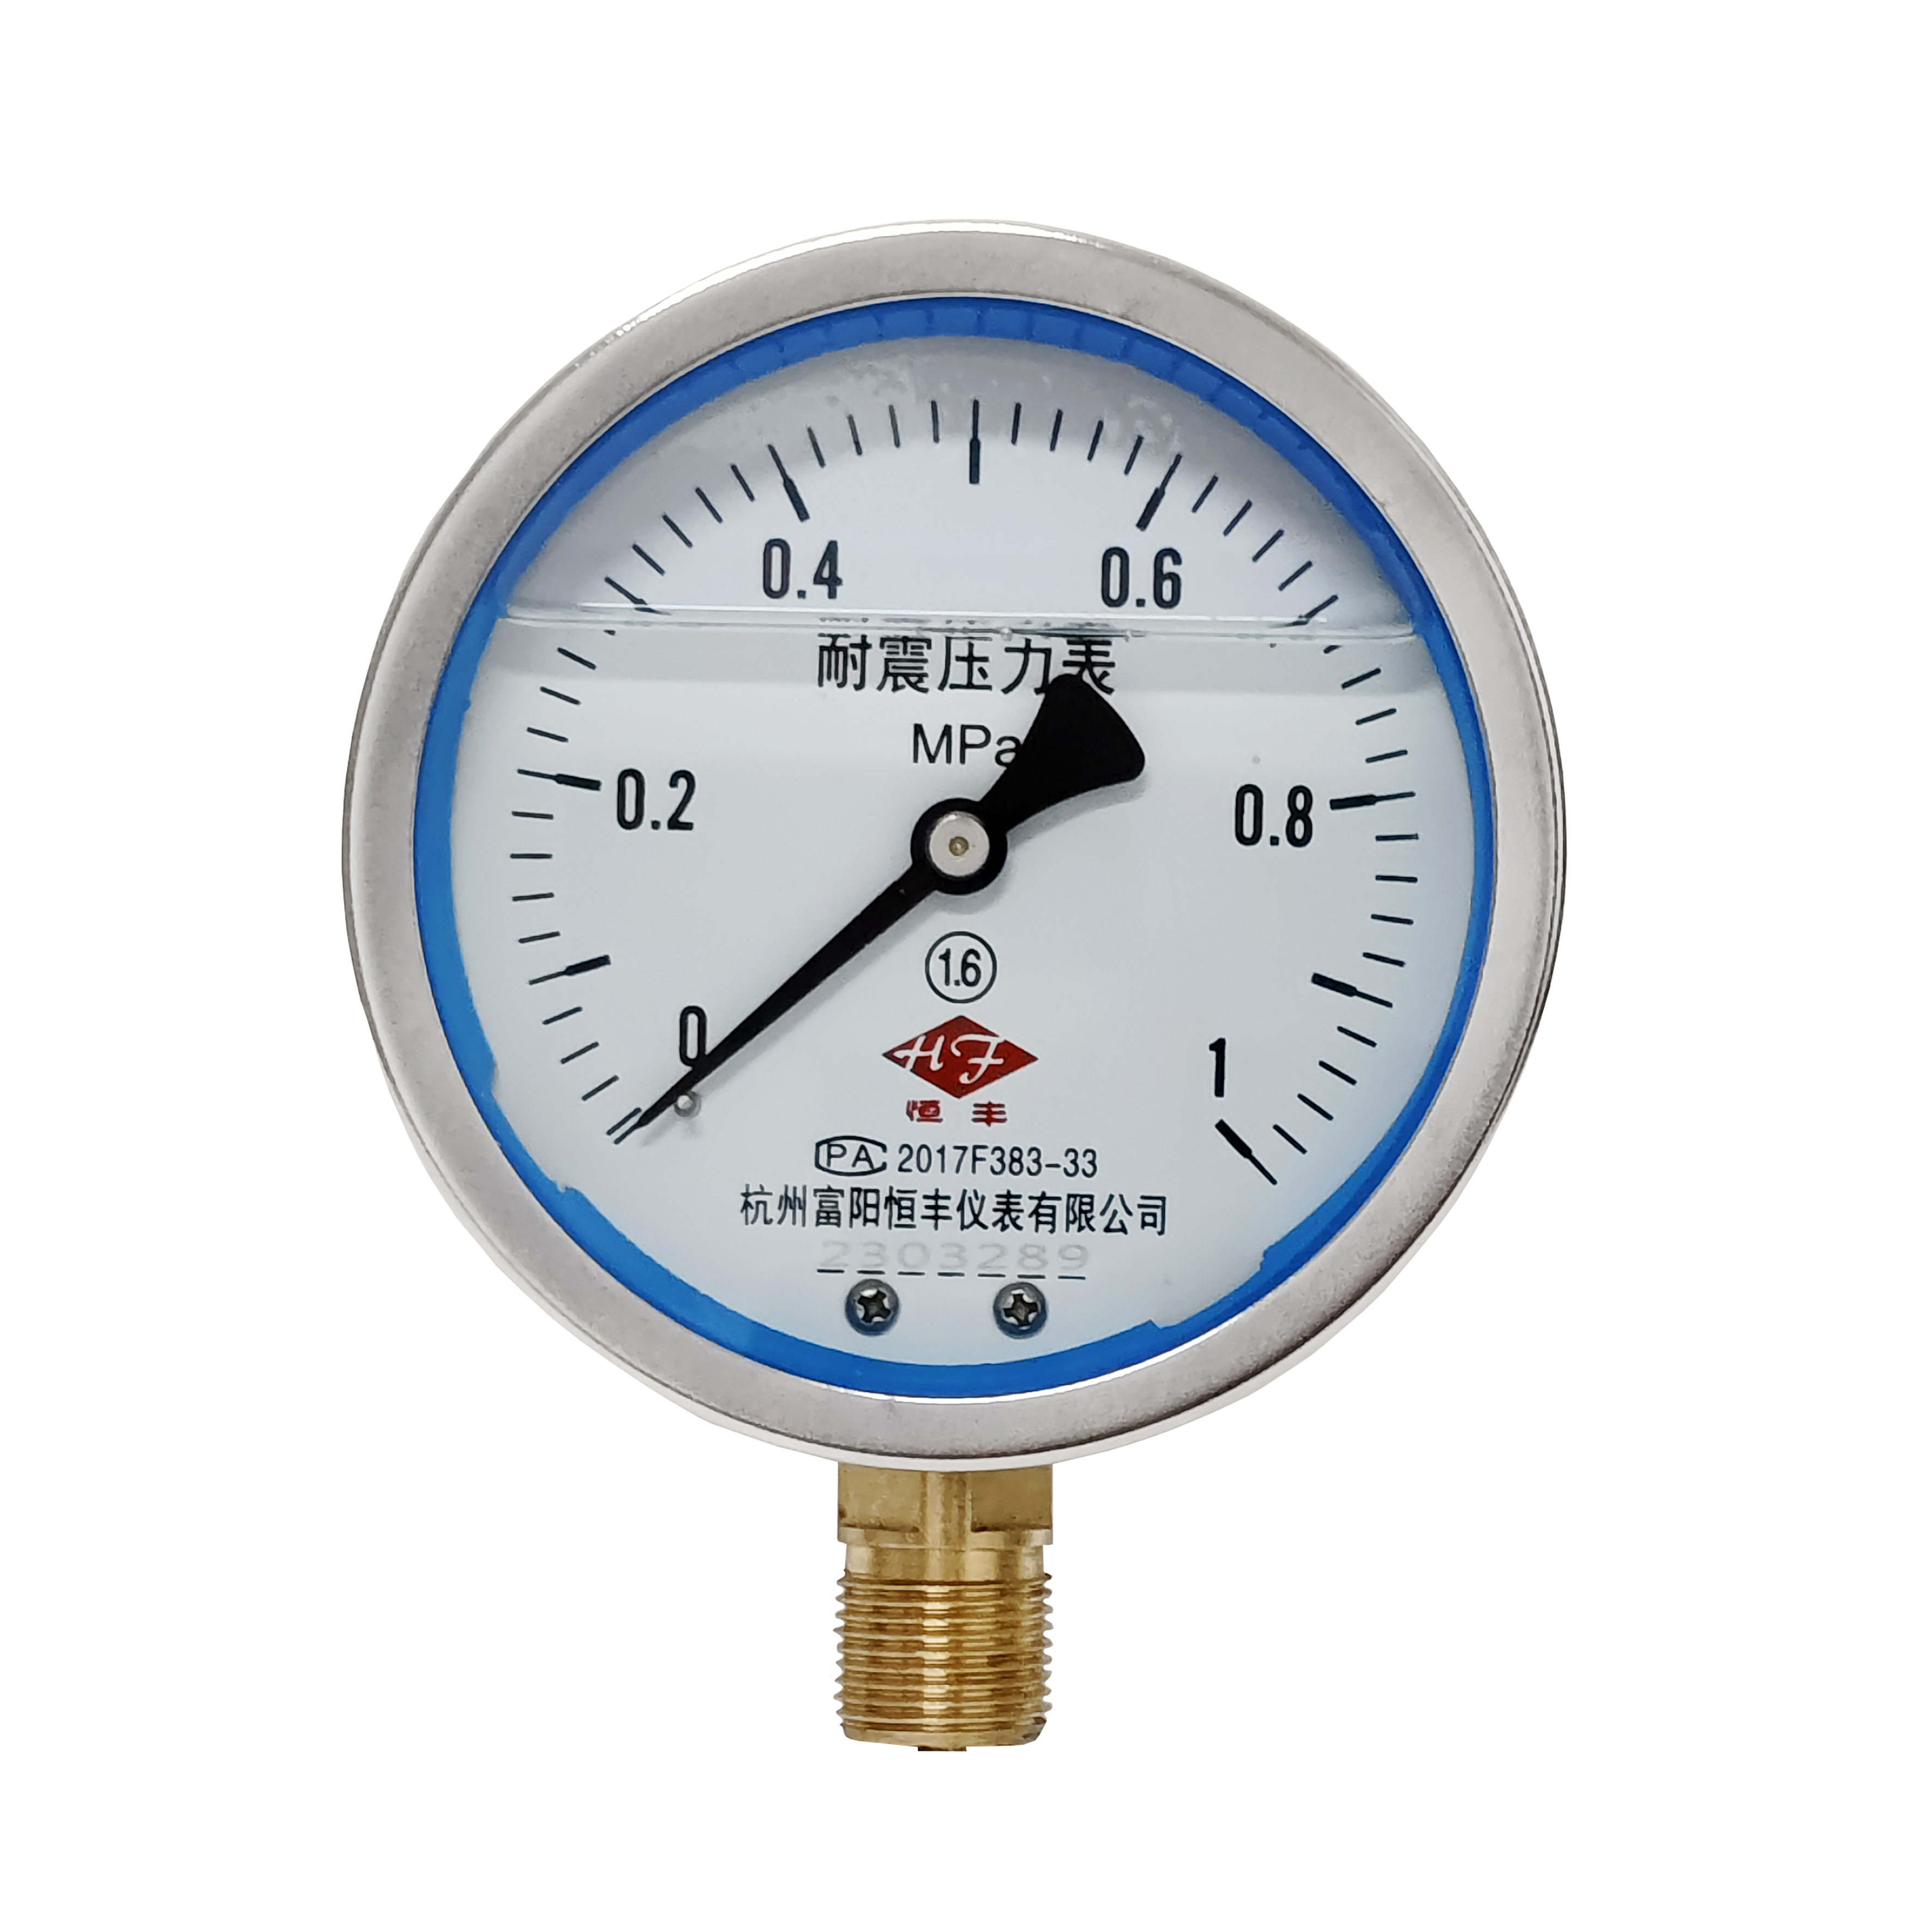 YN100 shock-proof pressure gauge